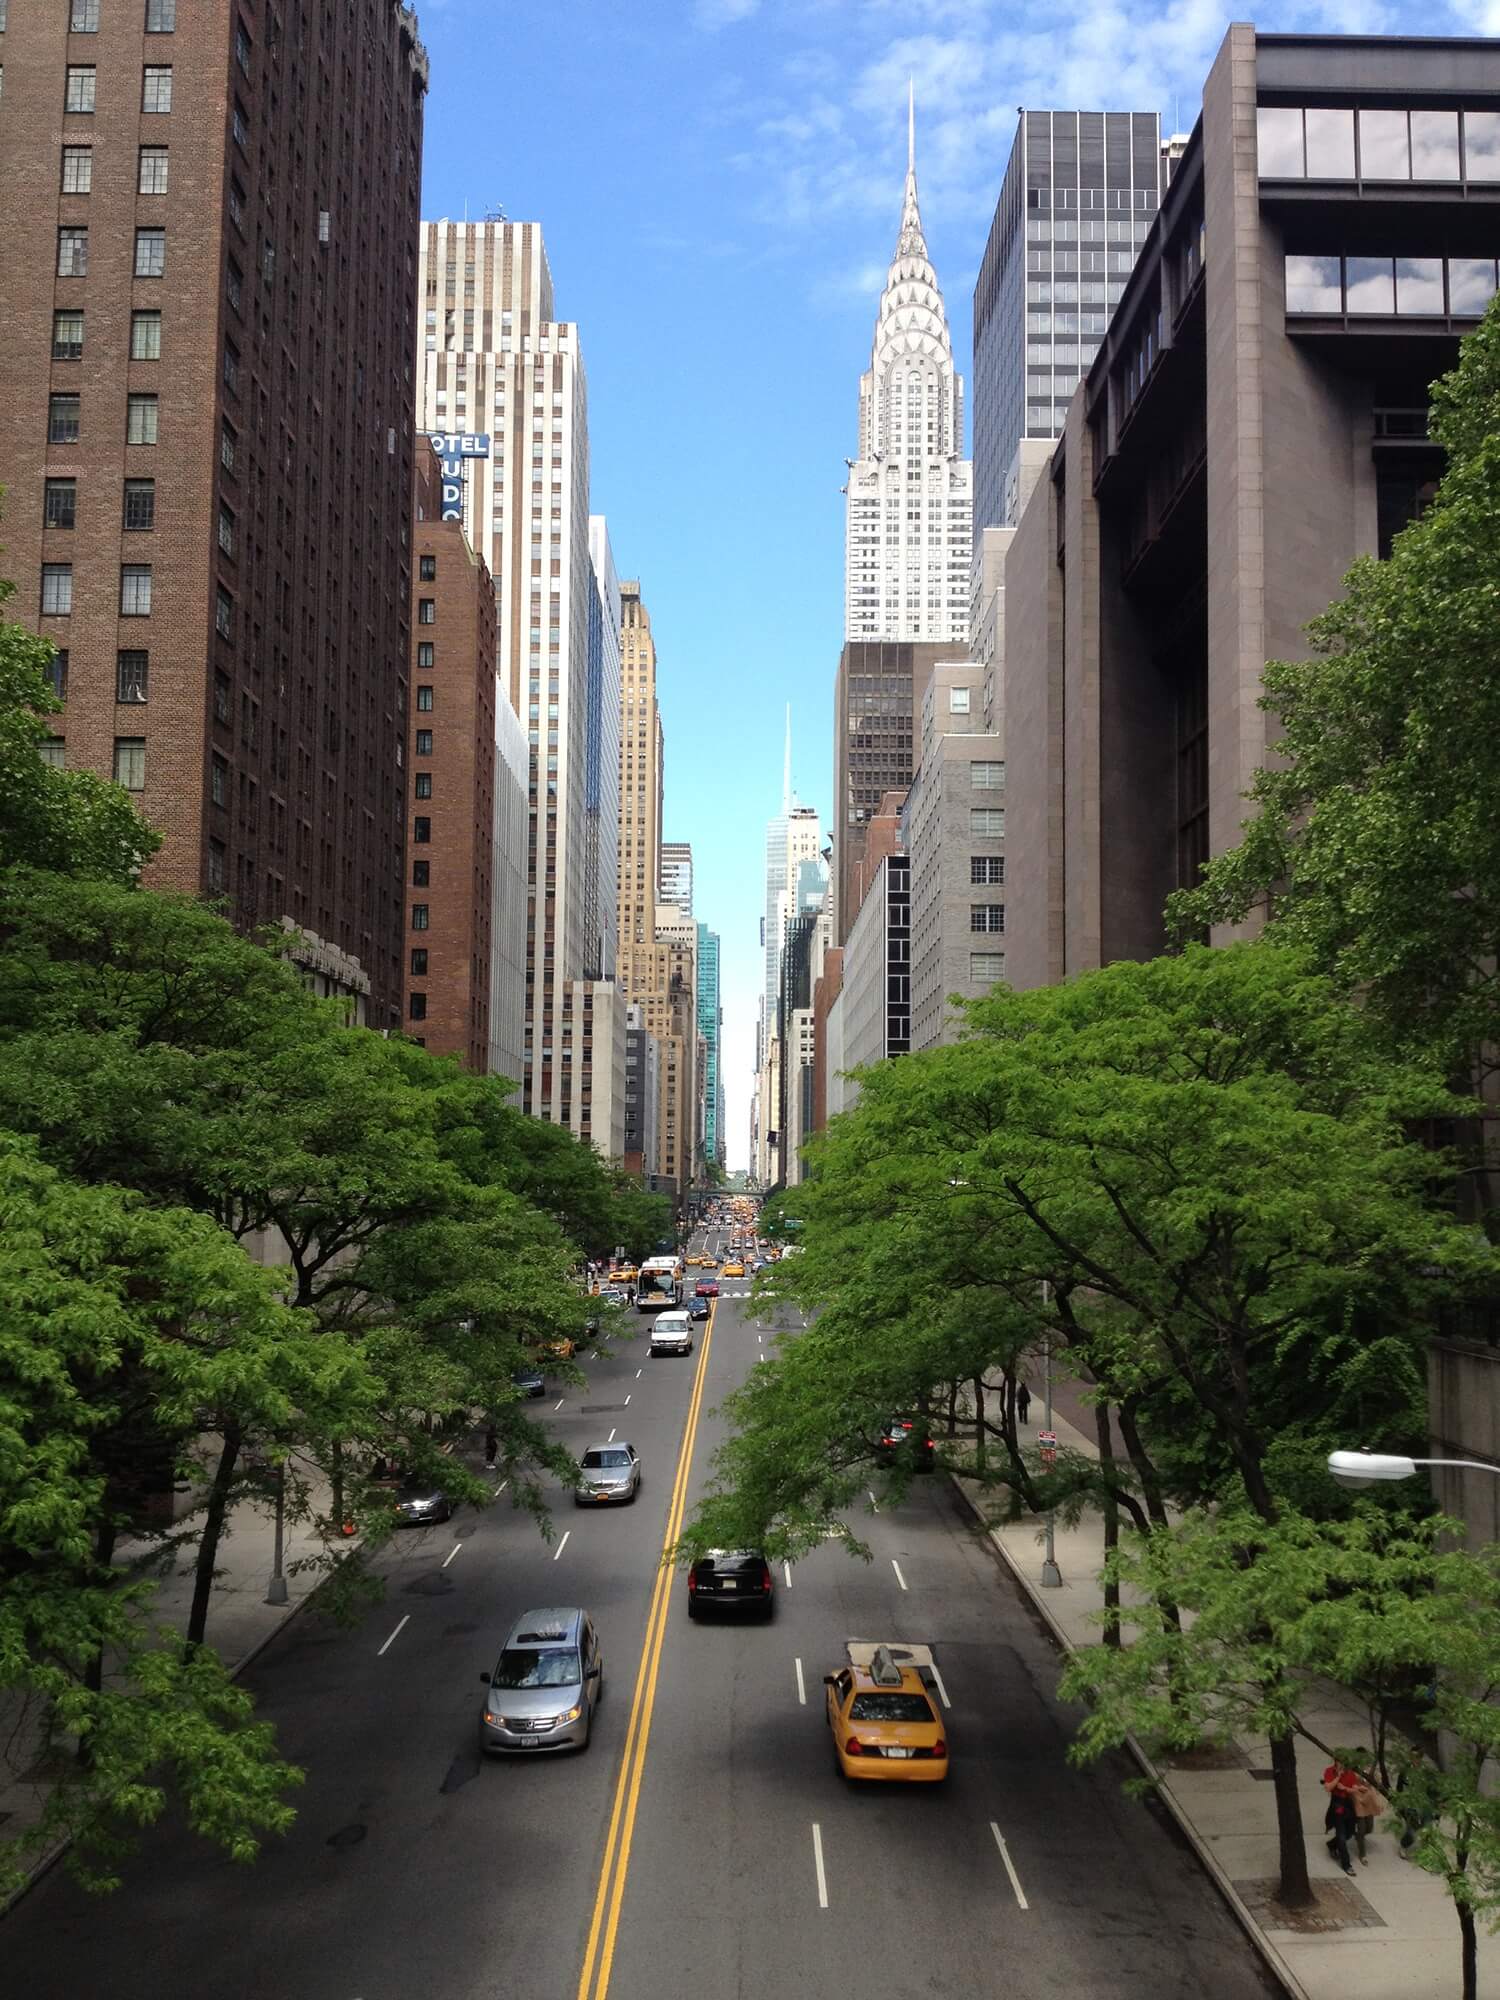 NYC city street view